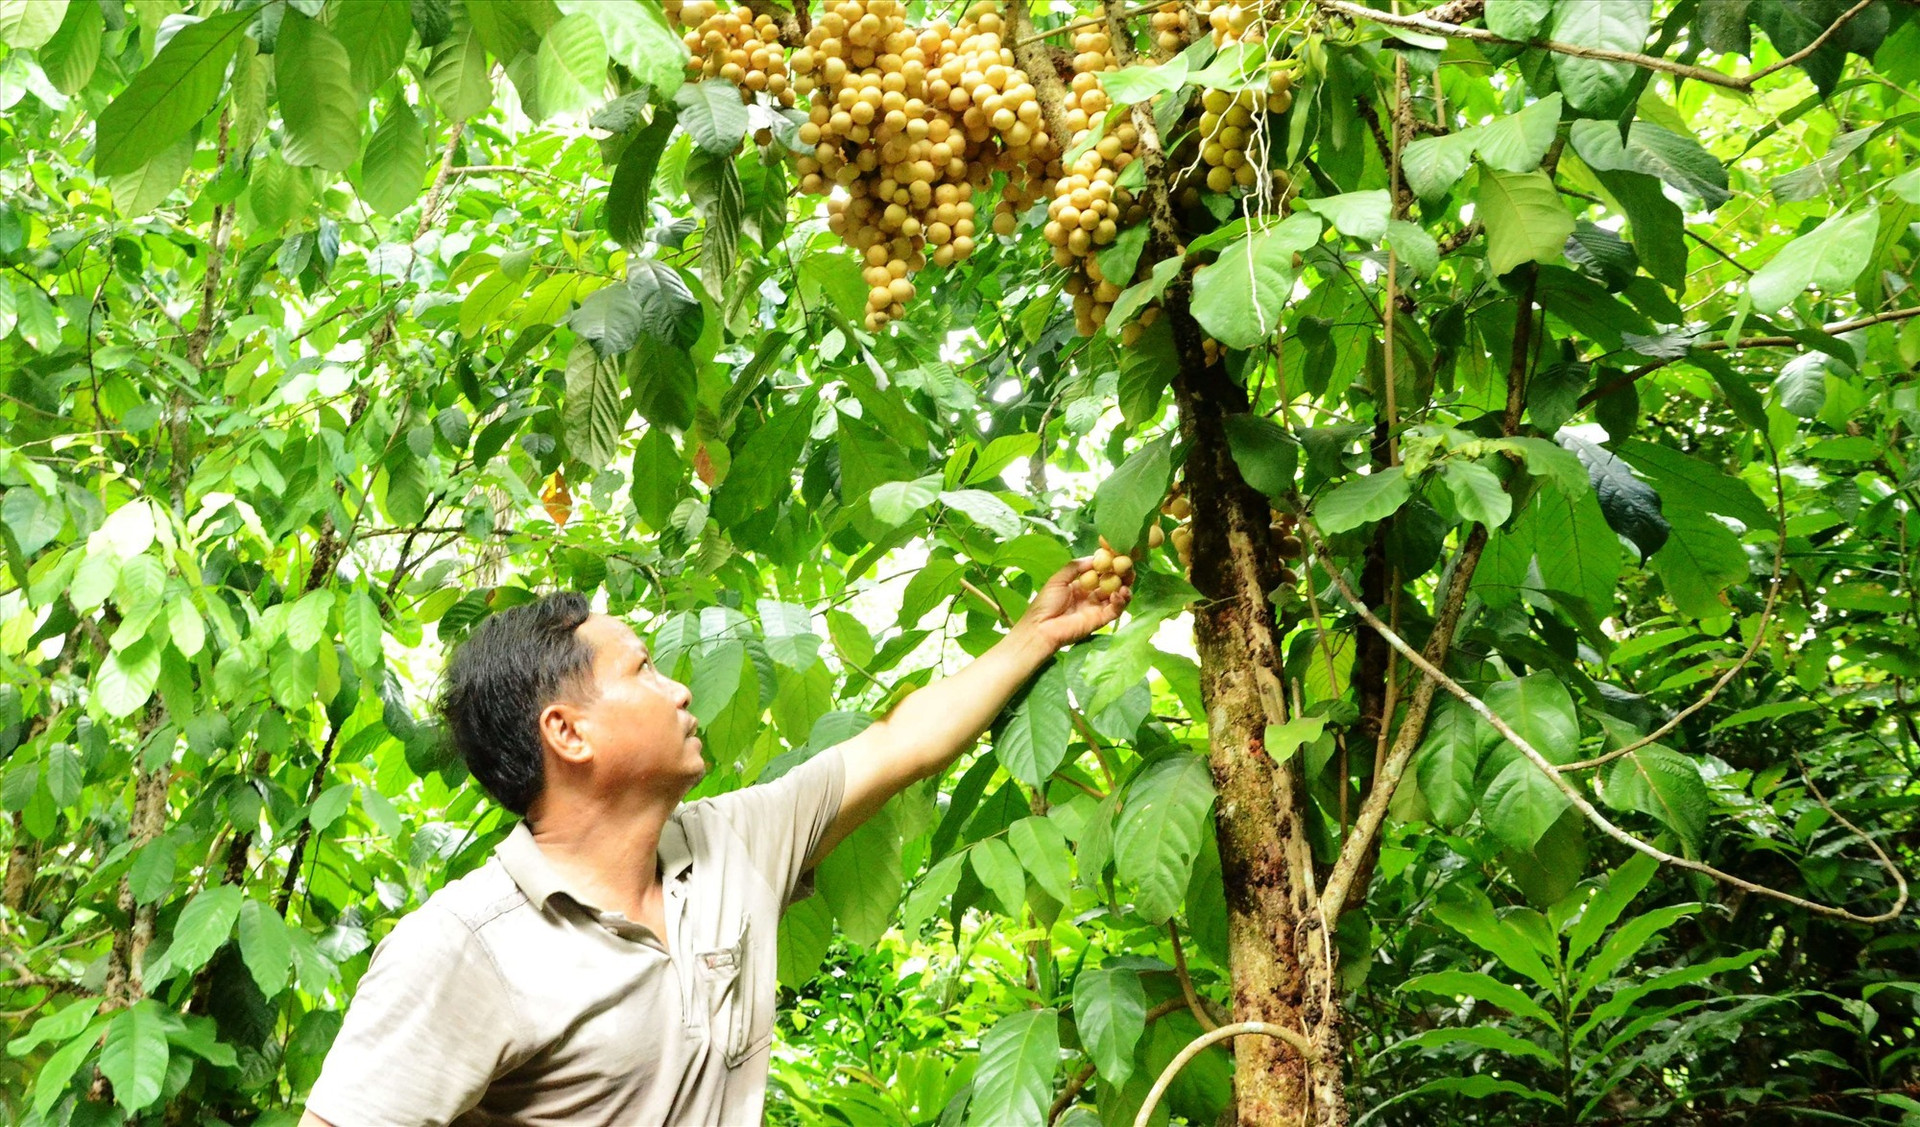 Mr. Nguyen Dinh The's family in Loc Yen village collects around half a ton of langsat (scientific name: Lansium Domesticum)